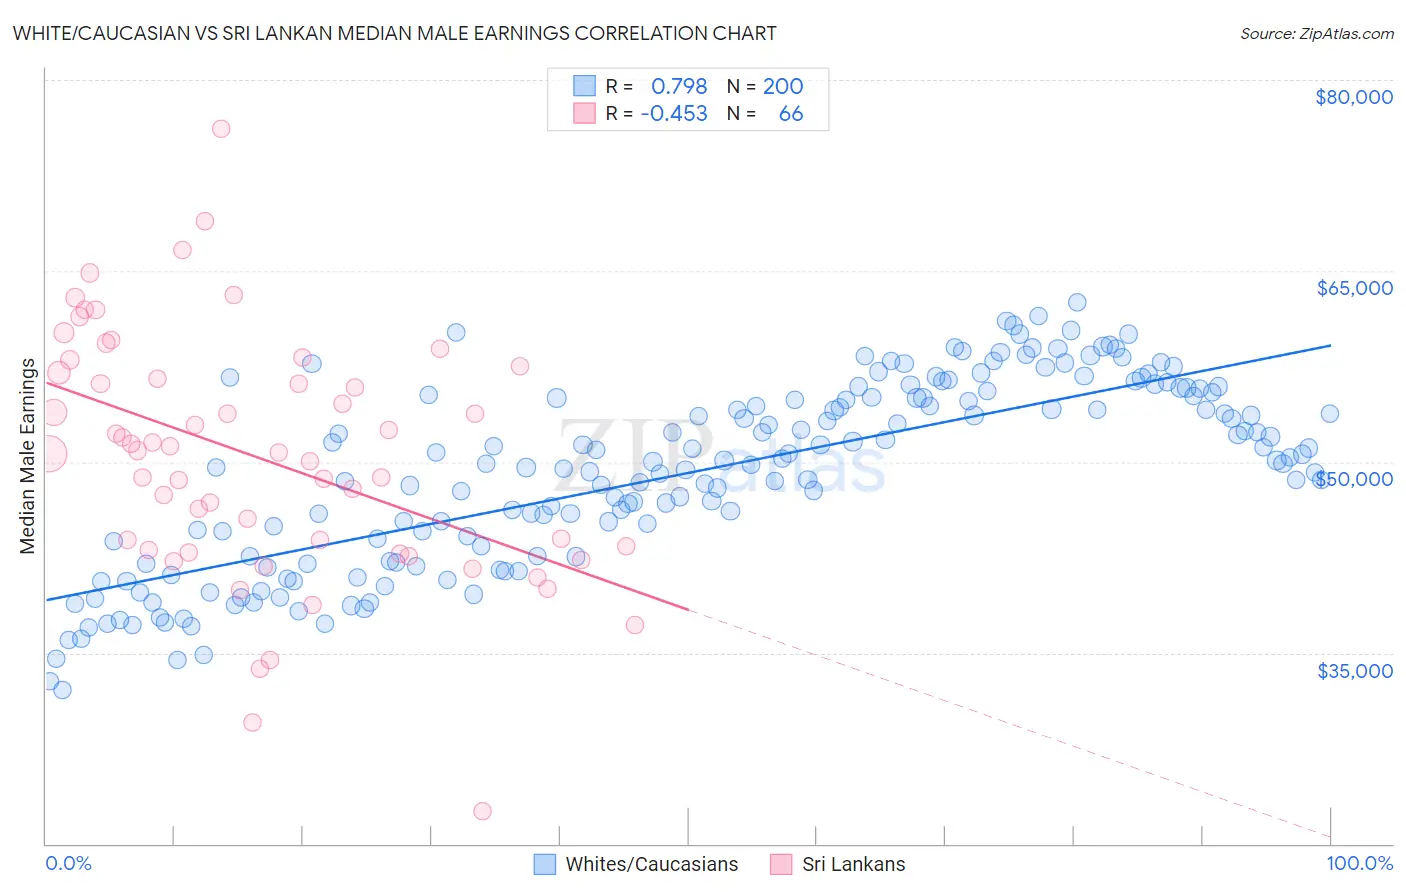 White/Caucasian vs Sri Lankan Median Male Earnings